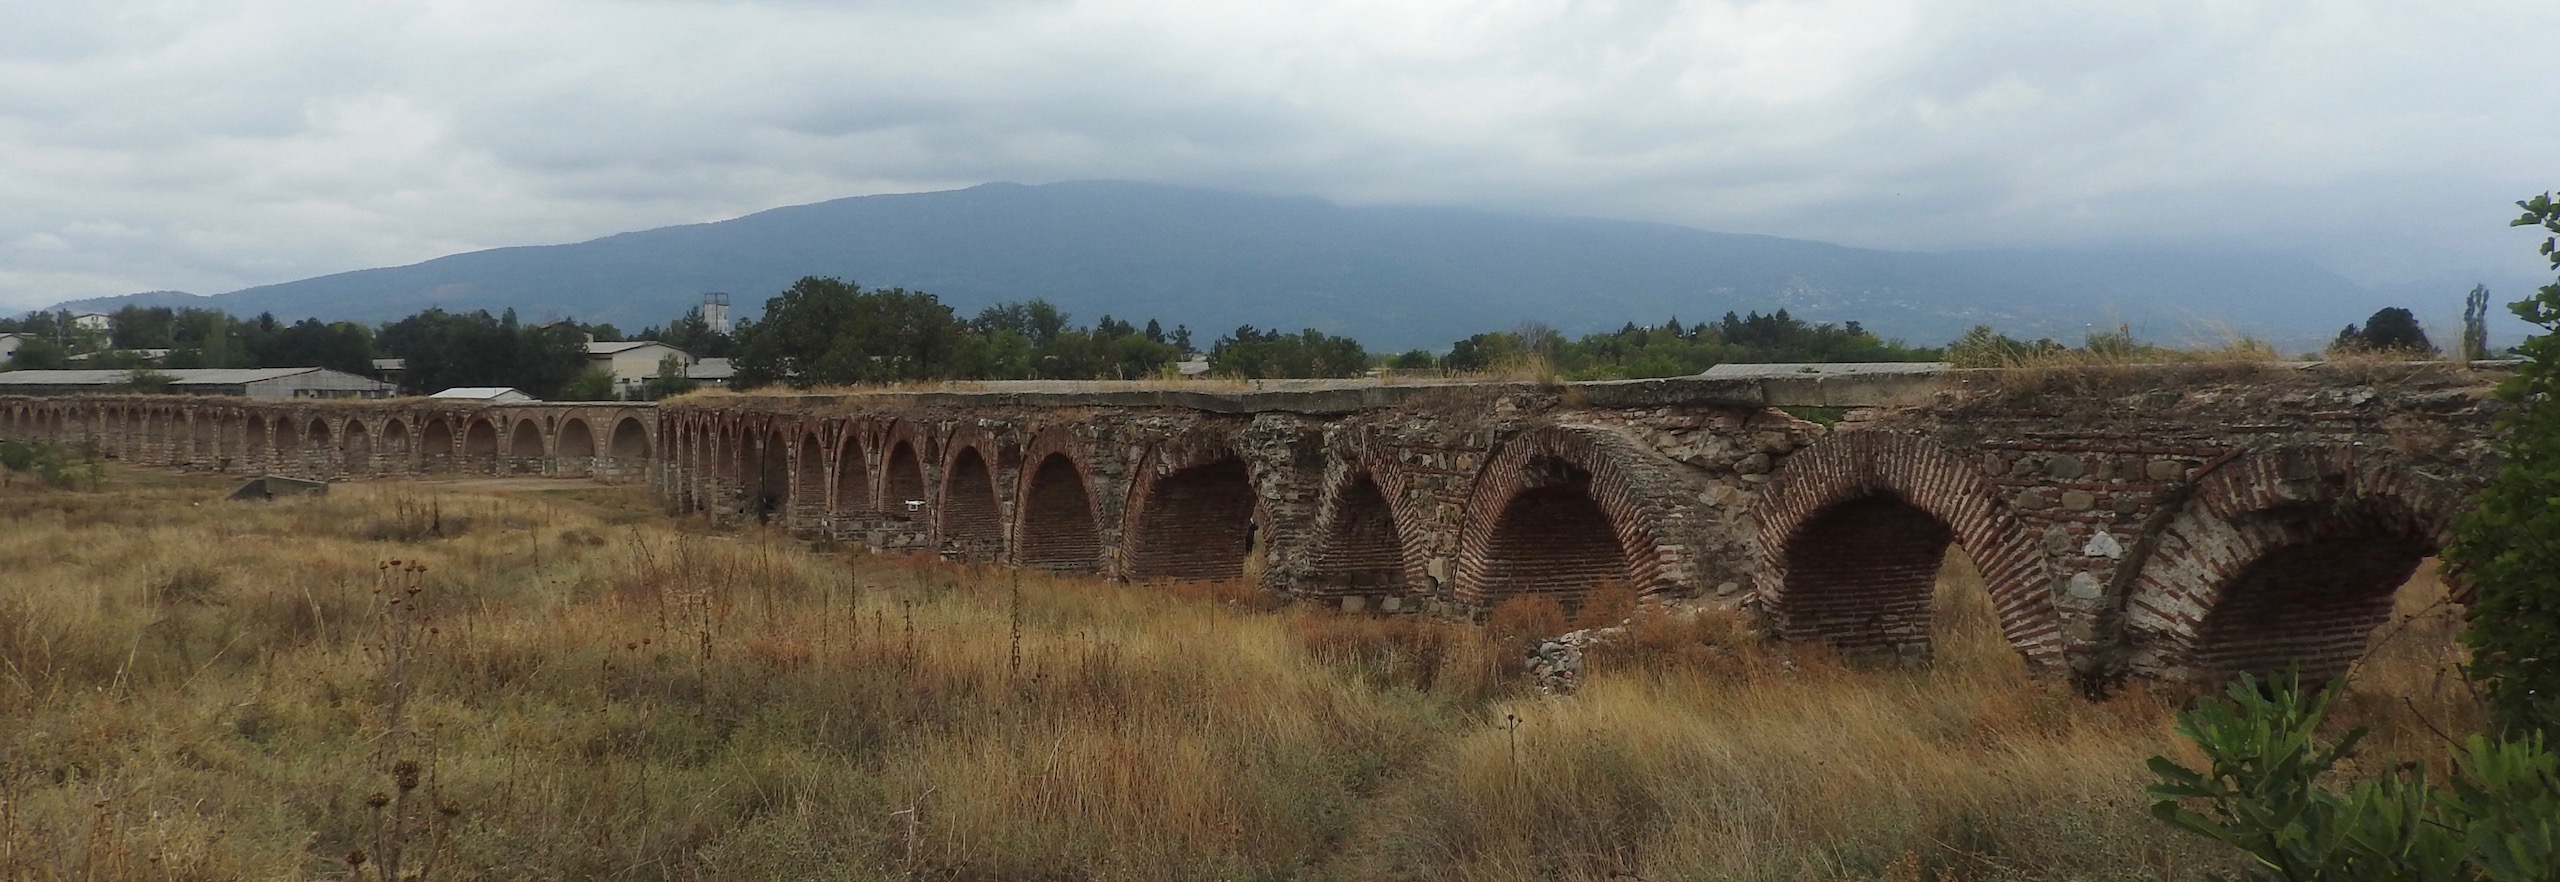 Roman Aqueduct, Skopje